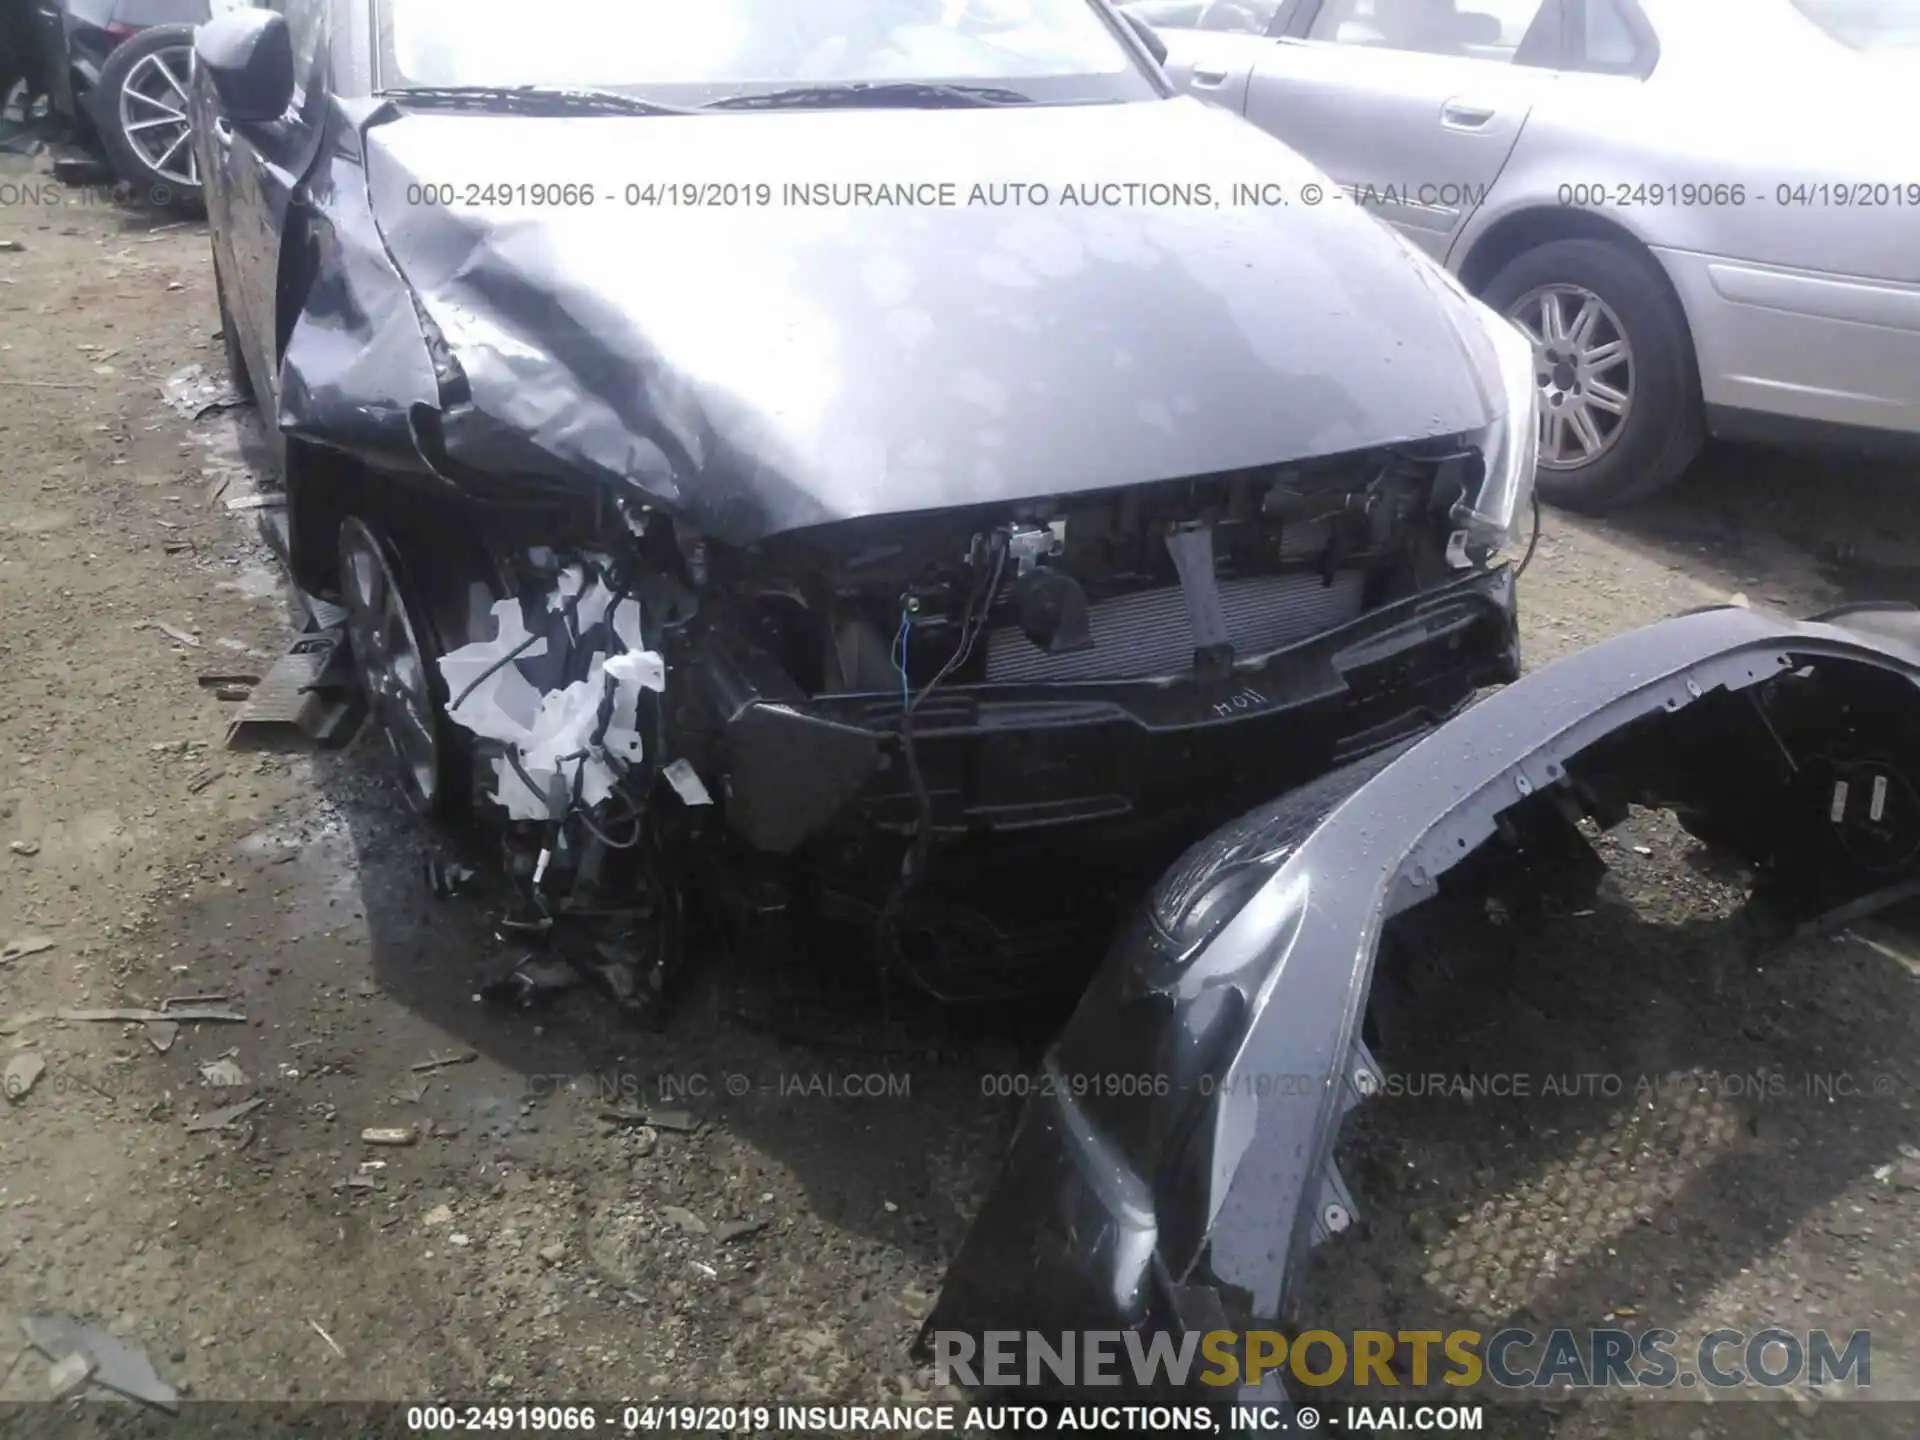 6 Photograph of a damaged car 3MYDLBYV6KY509010 TOYOTA YARIS 2019